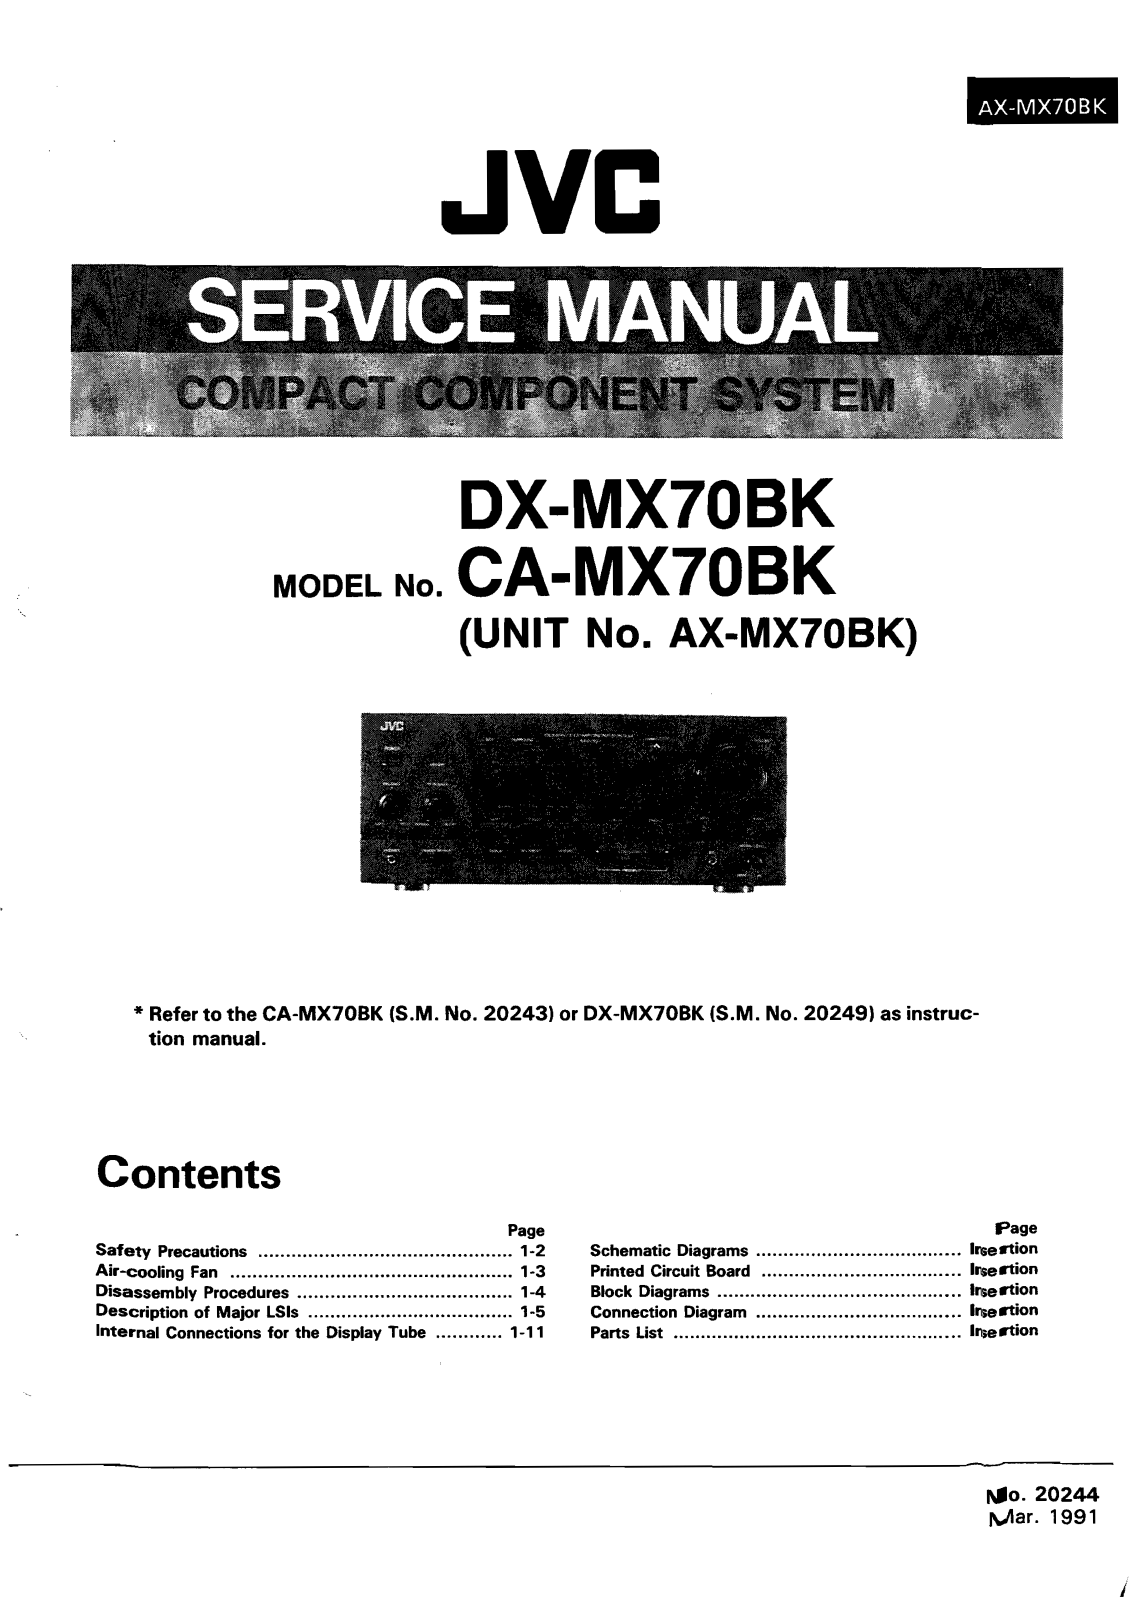 Jvc DX-MX70-BK Service Manual